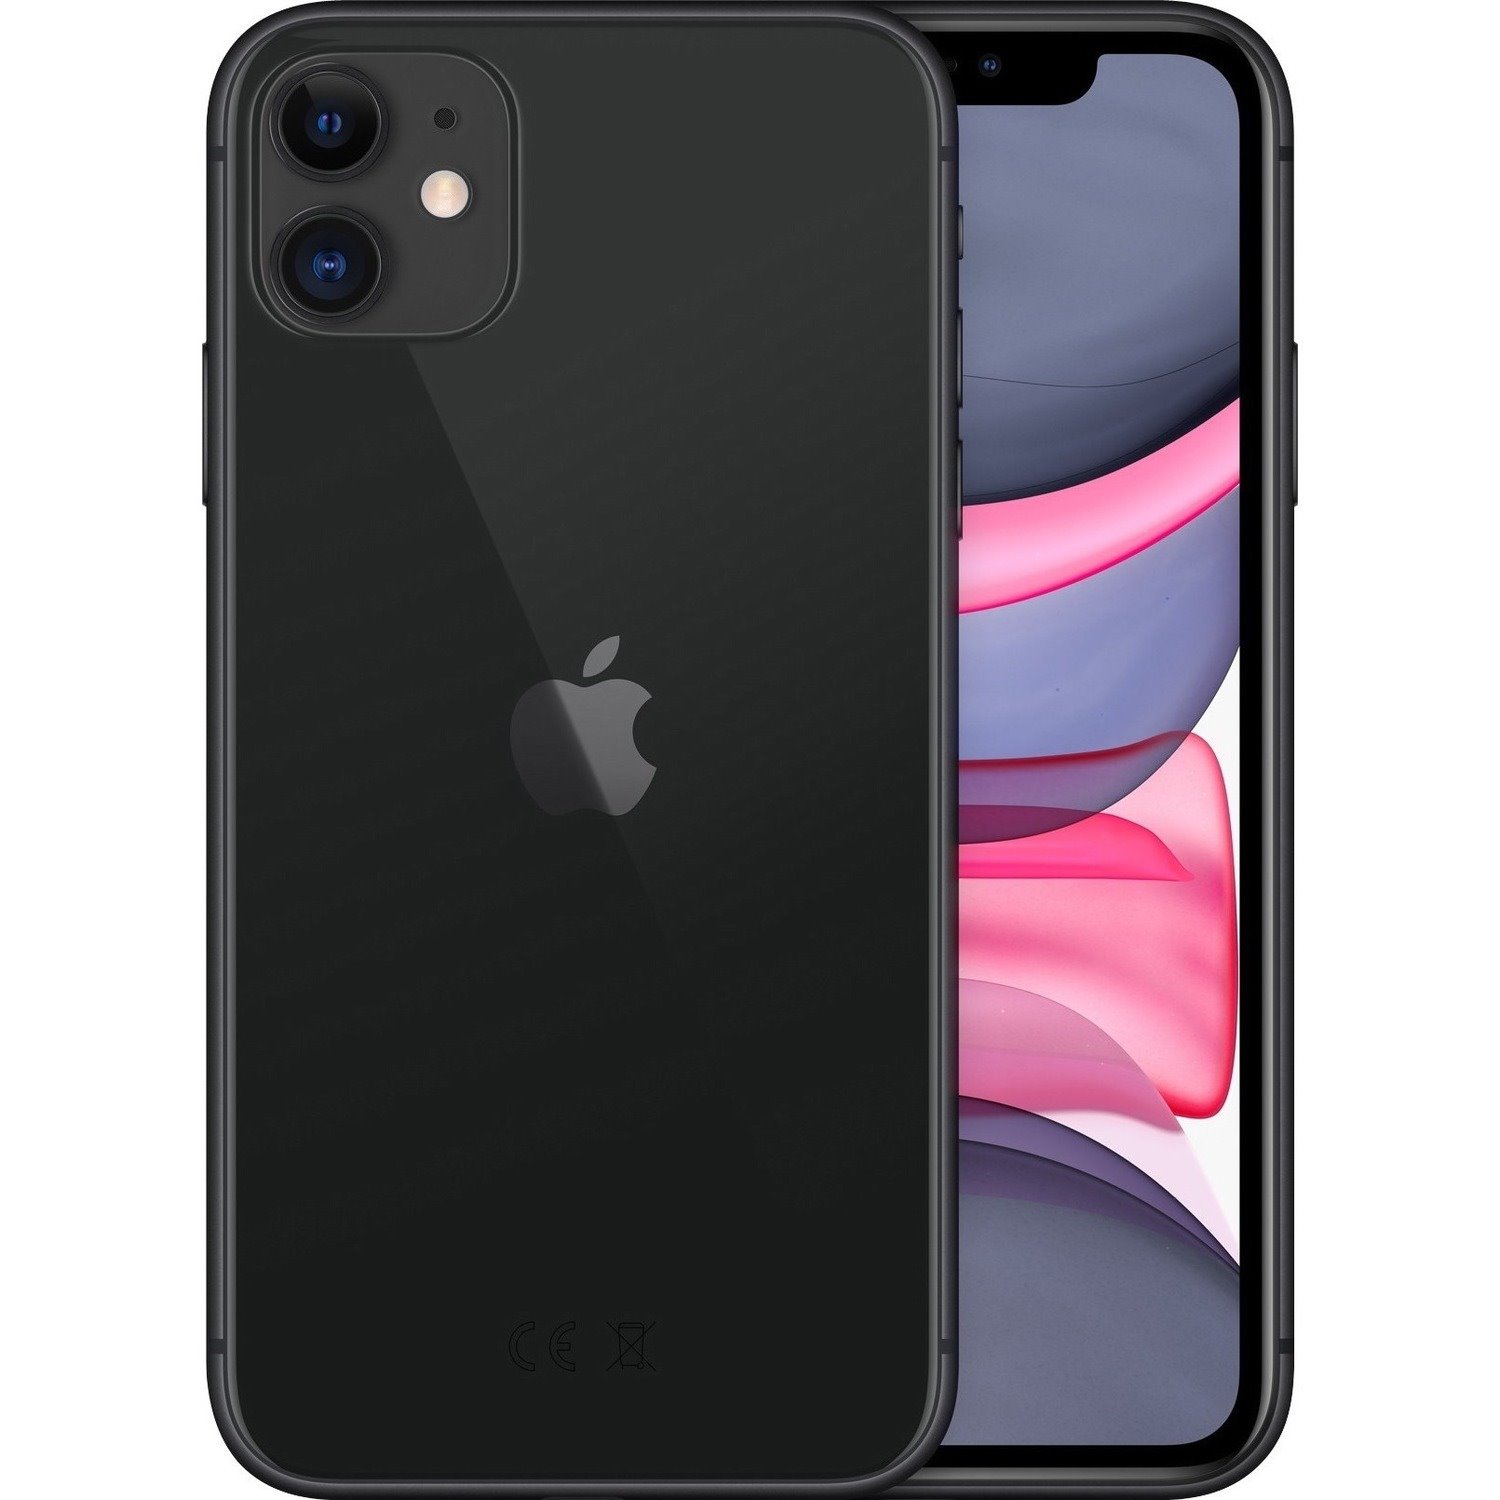 Apple Apple iPhone 11 128 GB Smartphone - 15.5 cm (6.1") LCD 1792 x 828 - Hexa-core (LightningDual-core (2 Core) 2.65 GHz + Thunder Quad-core (4 Core) 1.80 GHz - 4 GB RAM - iOS 14 - 4G - Black